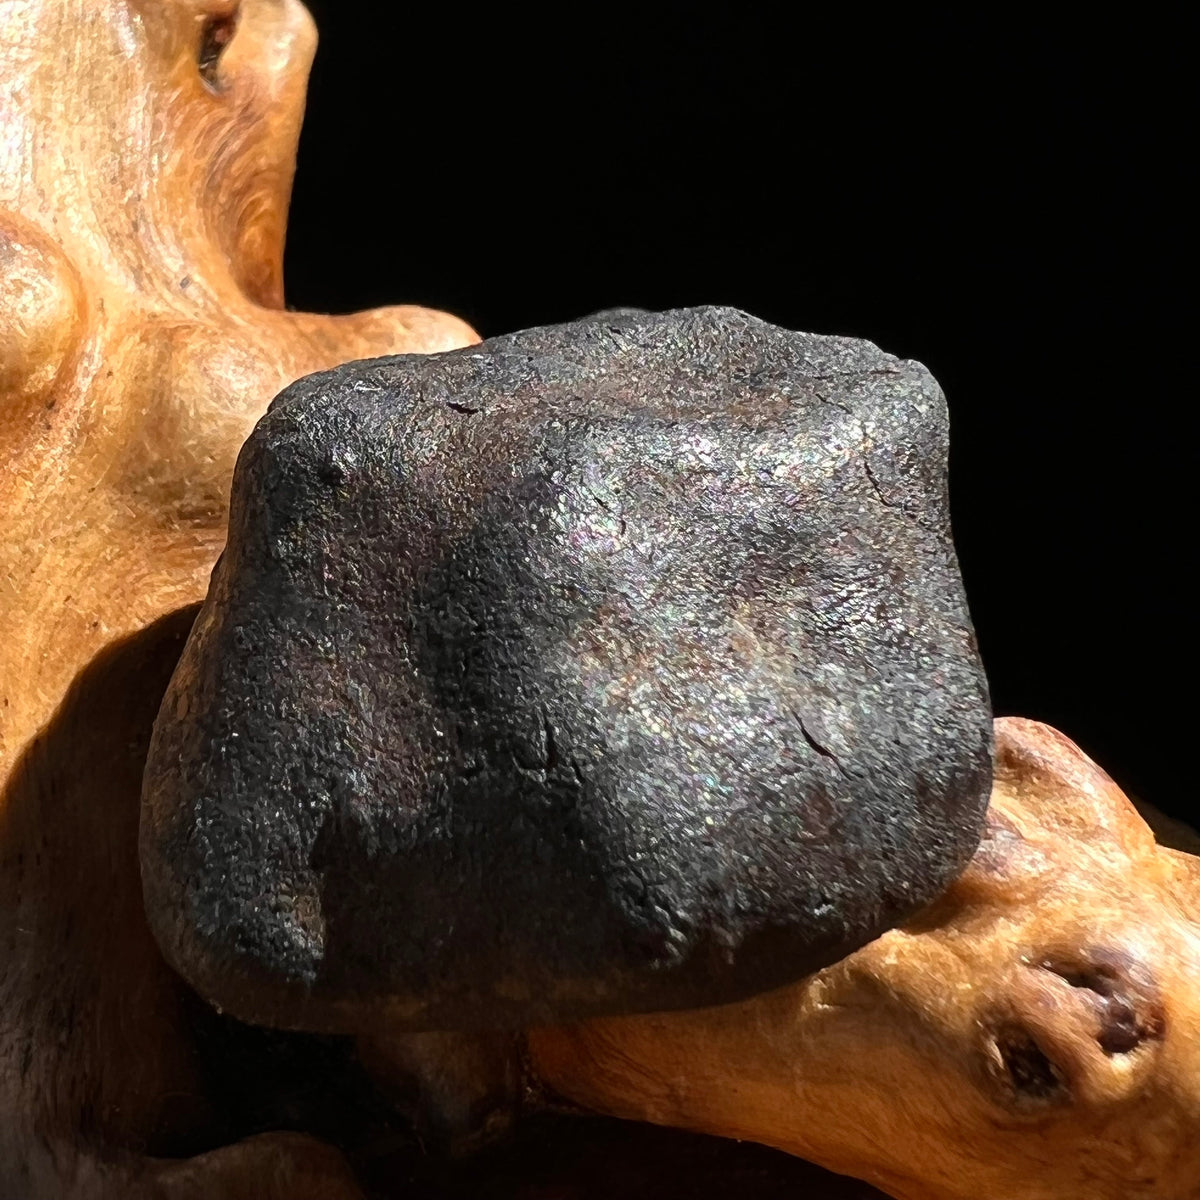 Chelyabinsk Meteorite Superbolide Asteroid 17.5 grams #90-Moldavite Life